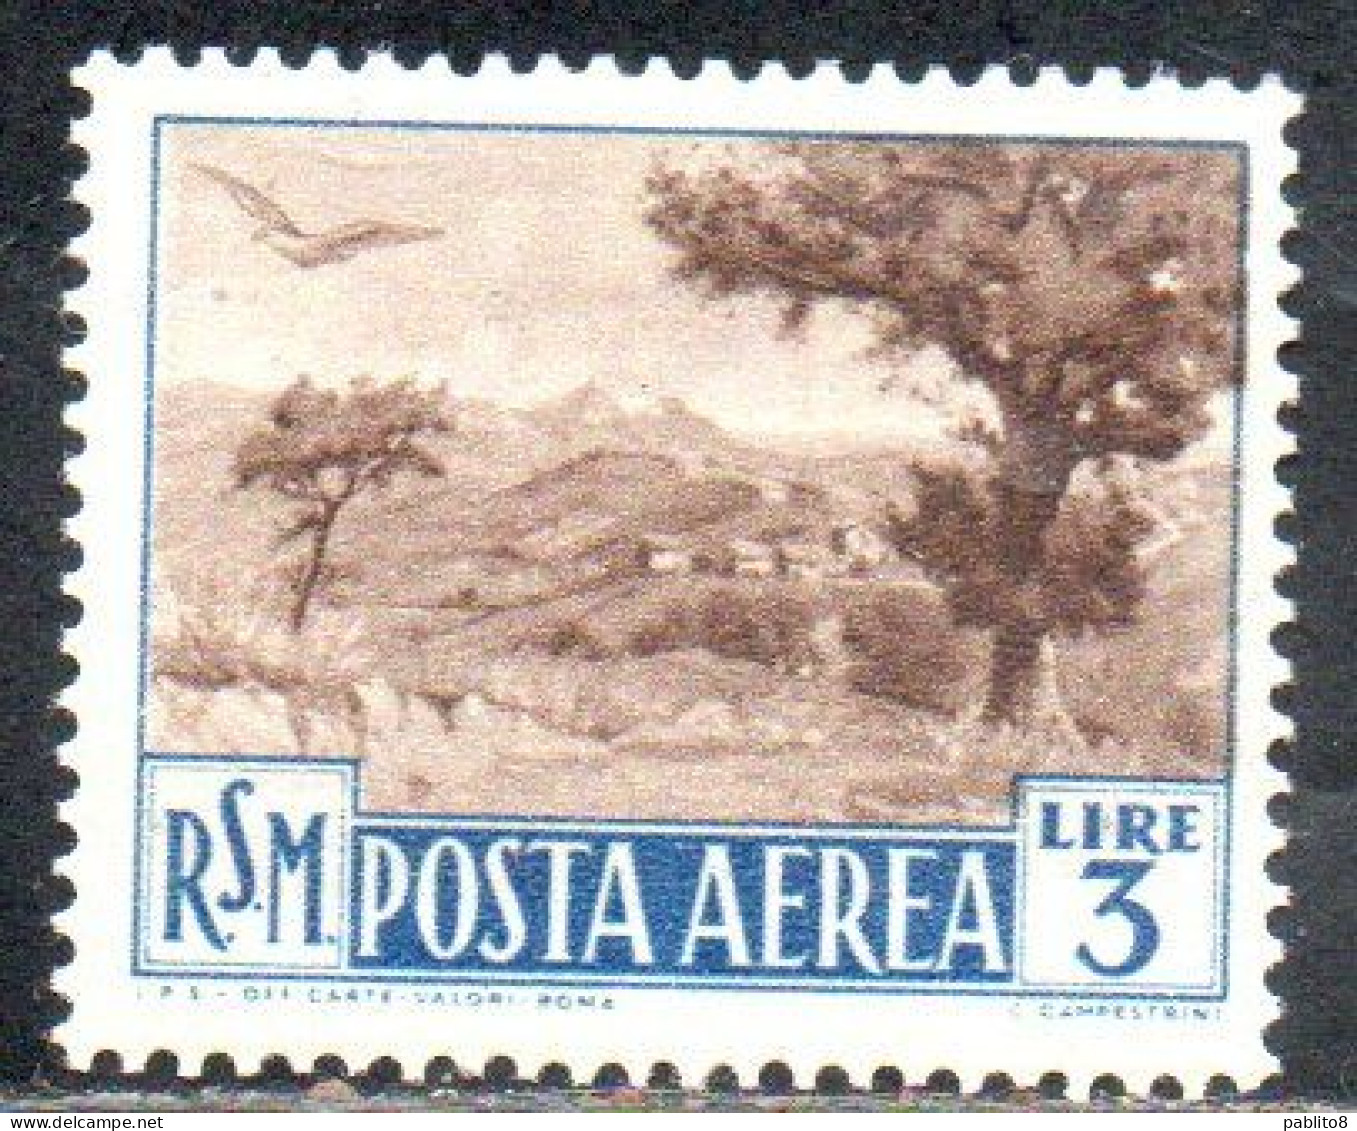 REPUBBLICA DI SAN MARINO 1950 POSTA AEREA AIR MAIL VIEWS VEDUTE LIRE 3 MNH - Airmail